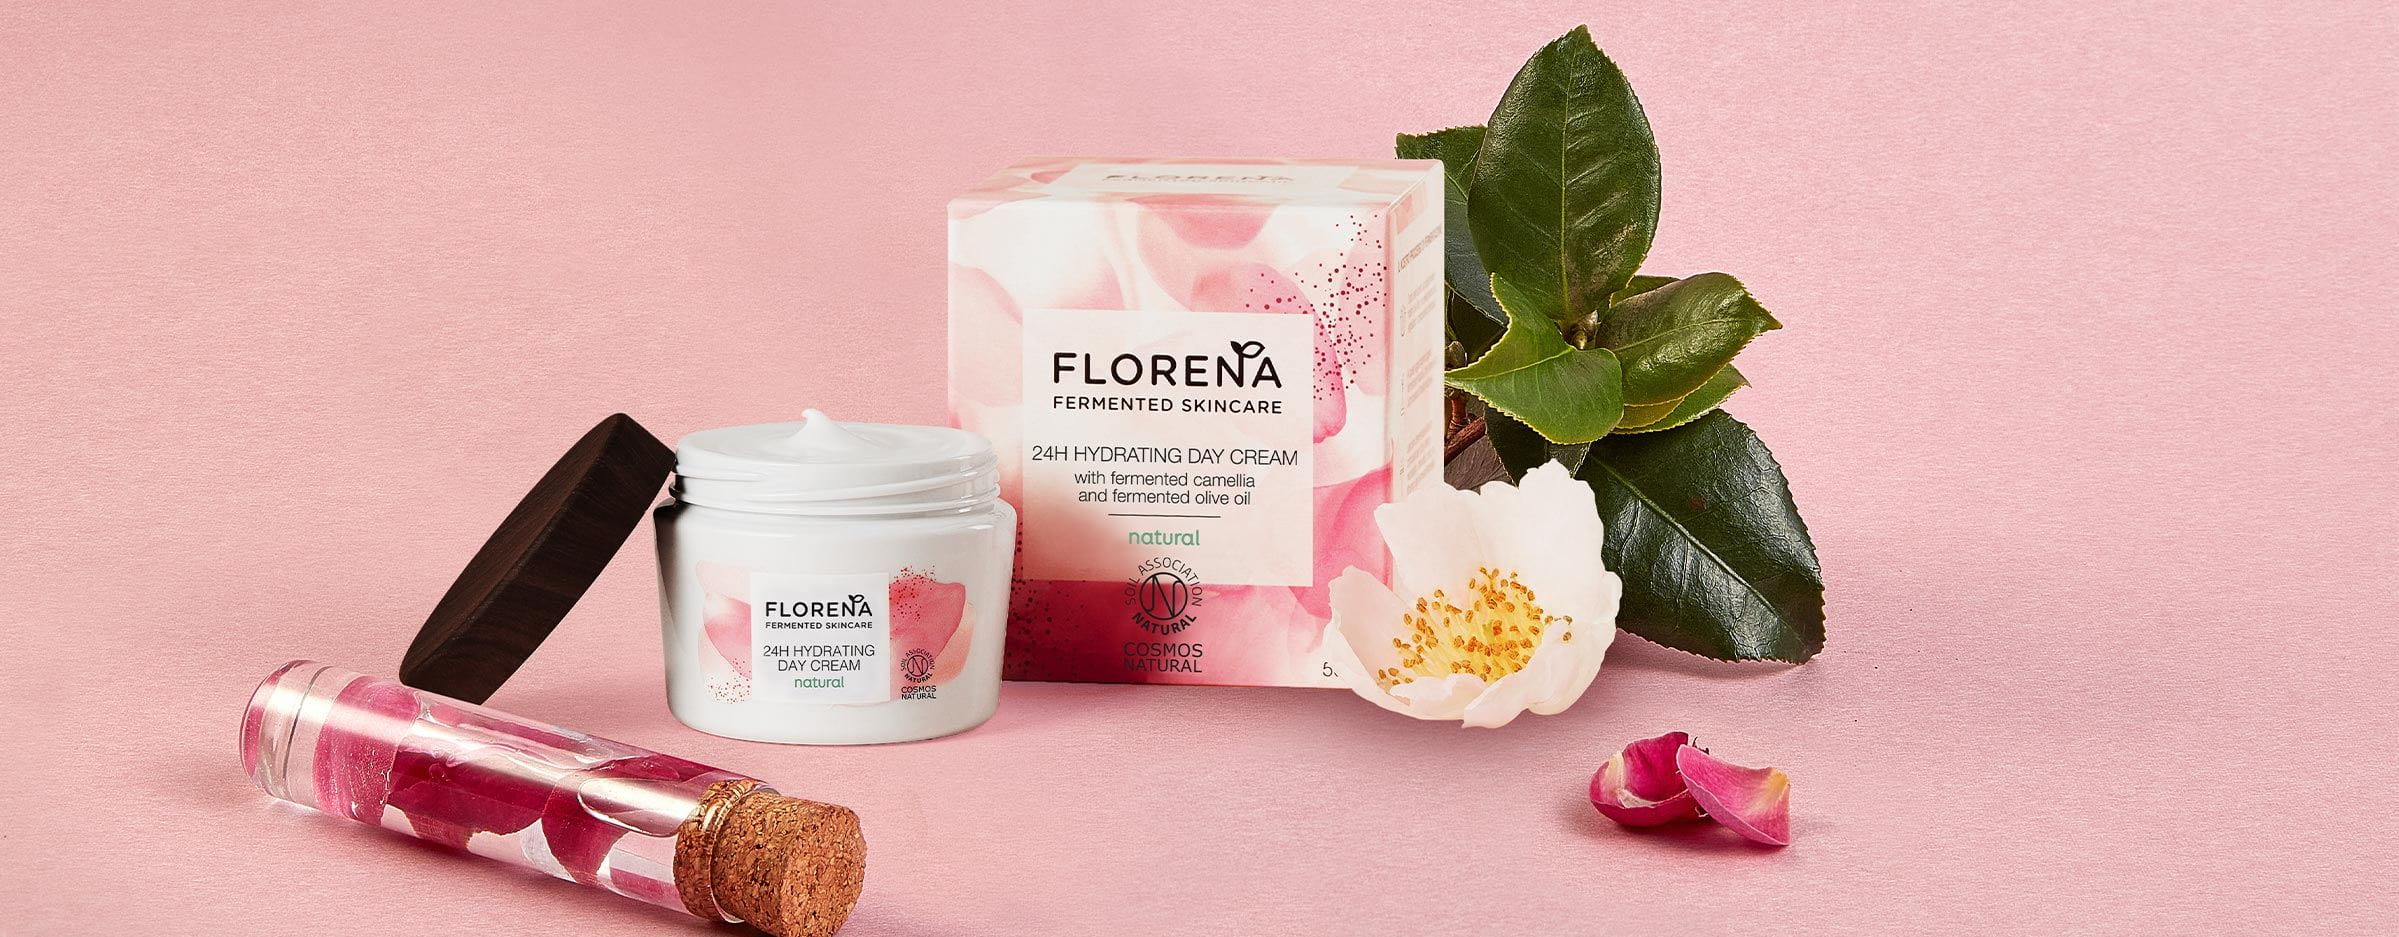 florena fermented skincare natural moisturiser